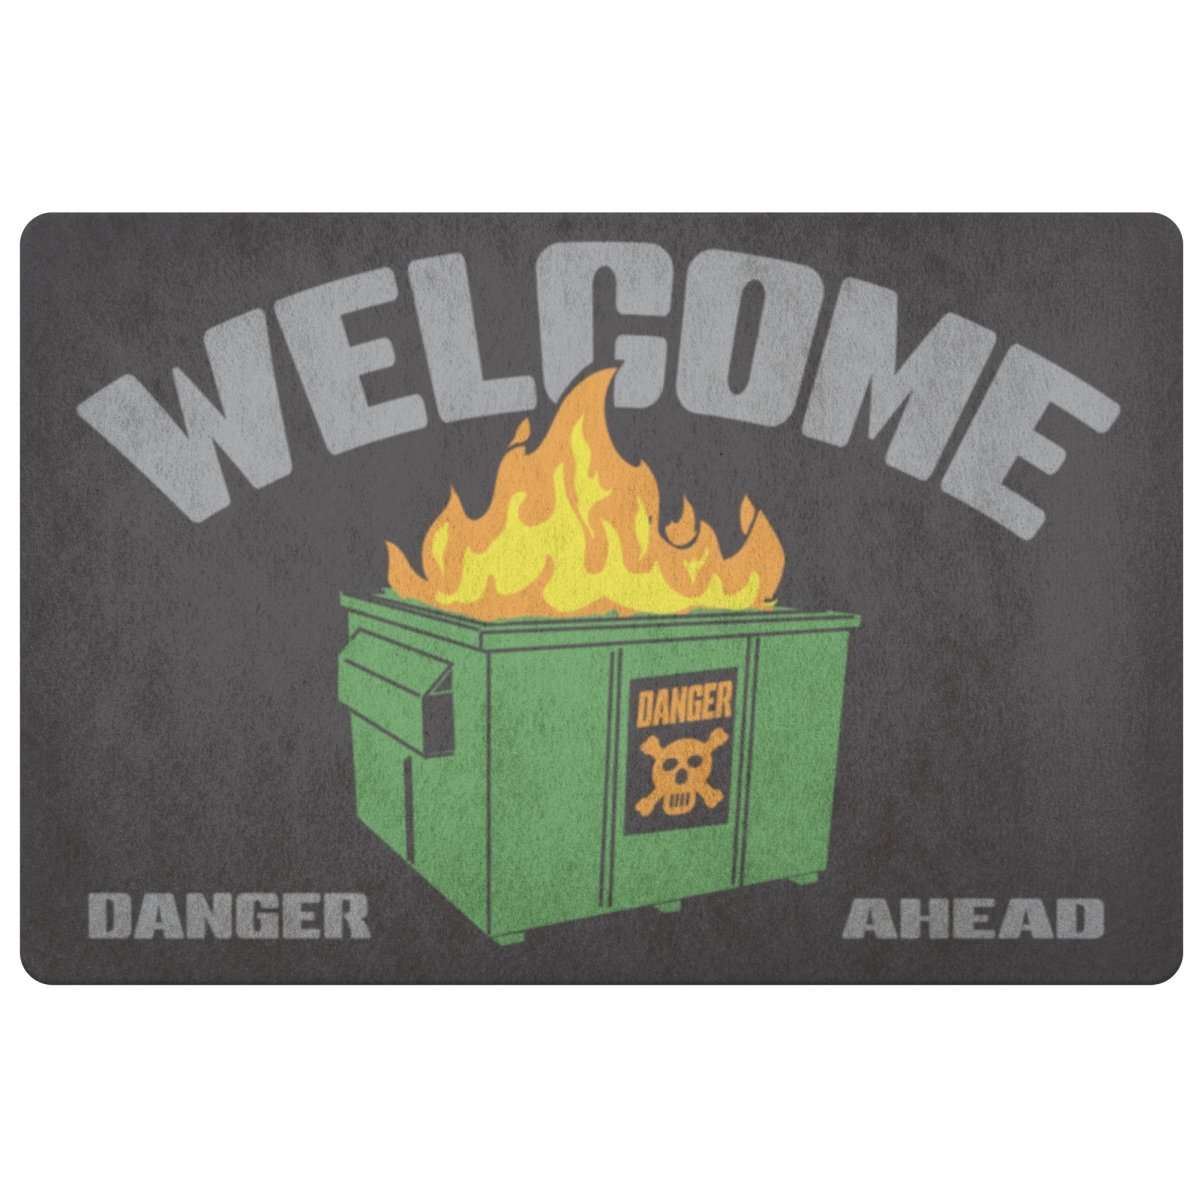 Dumpster Fire Welcome Mat, Danger Warning, Funny Home Gag Gift